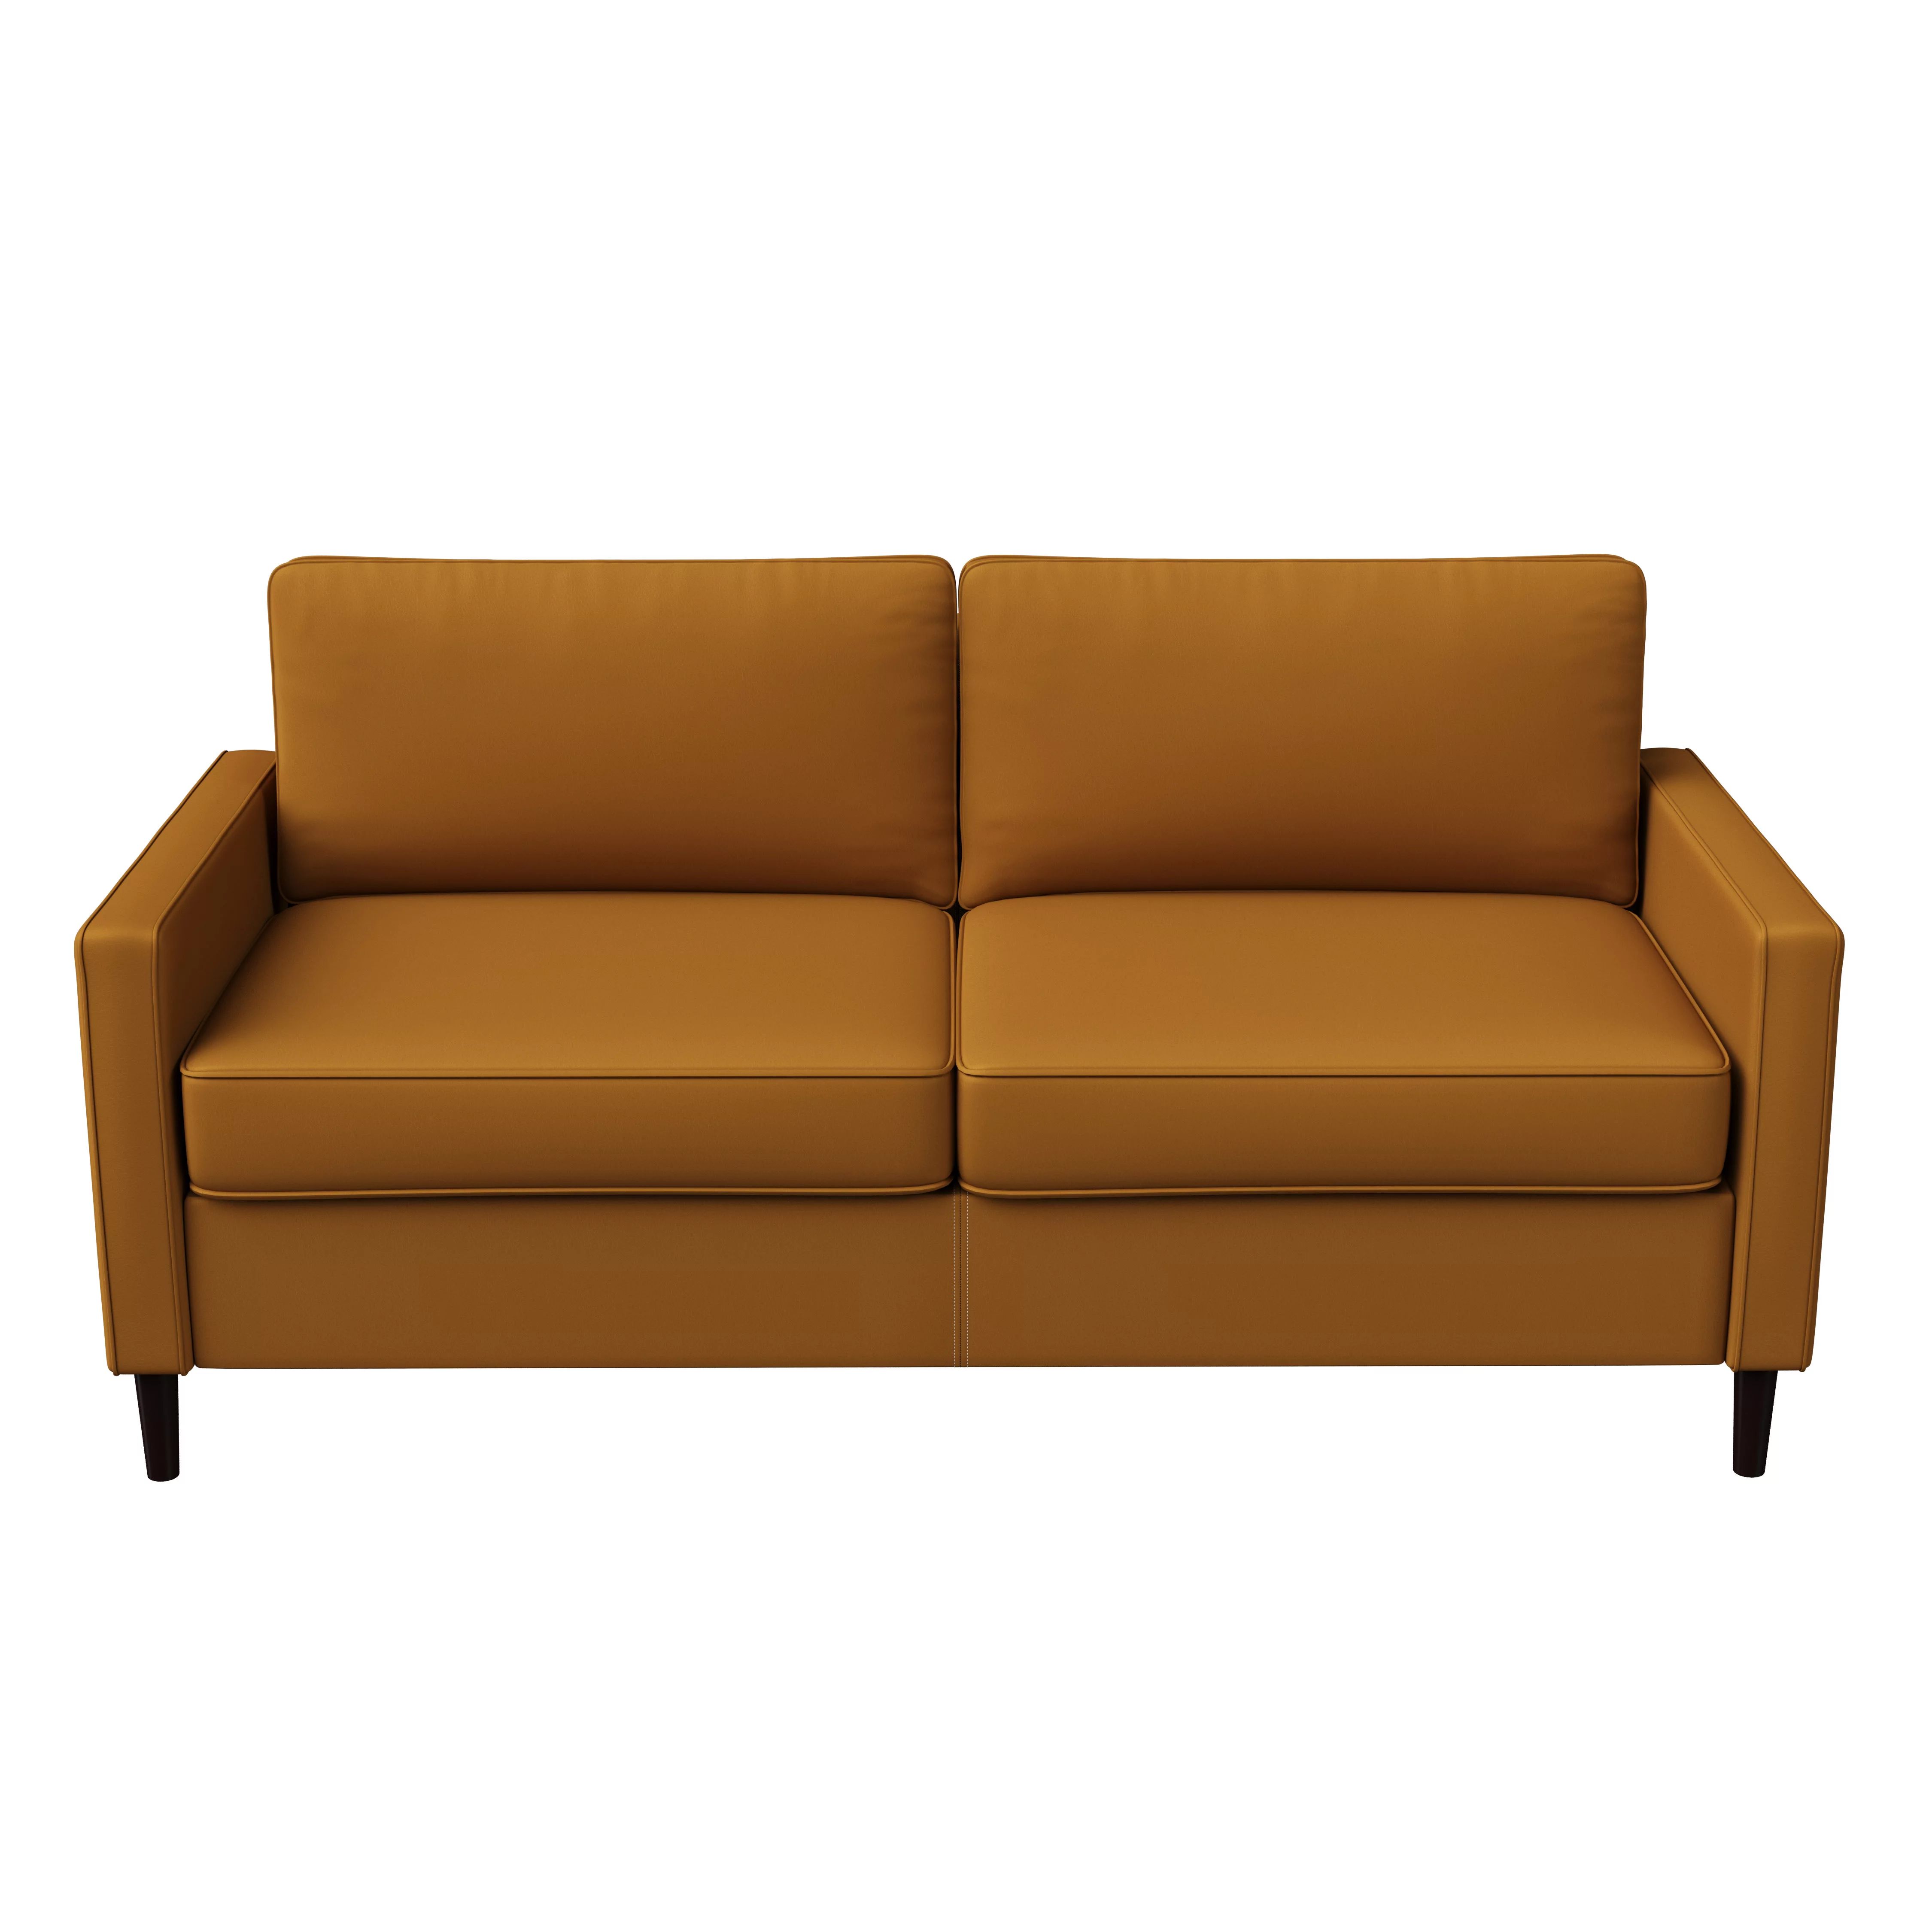 Desert Field Altus Sofa, Camel Brown Fabric | Walmart (US)